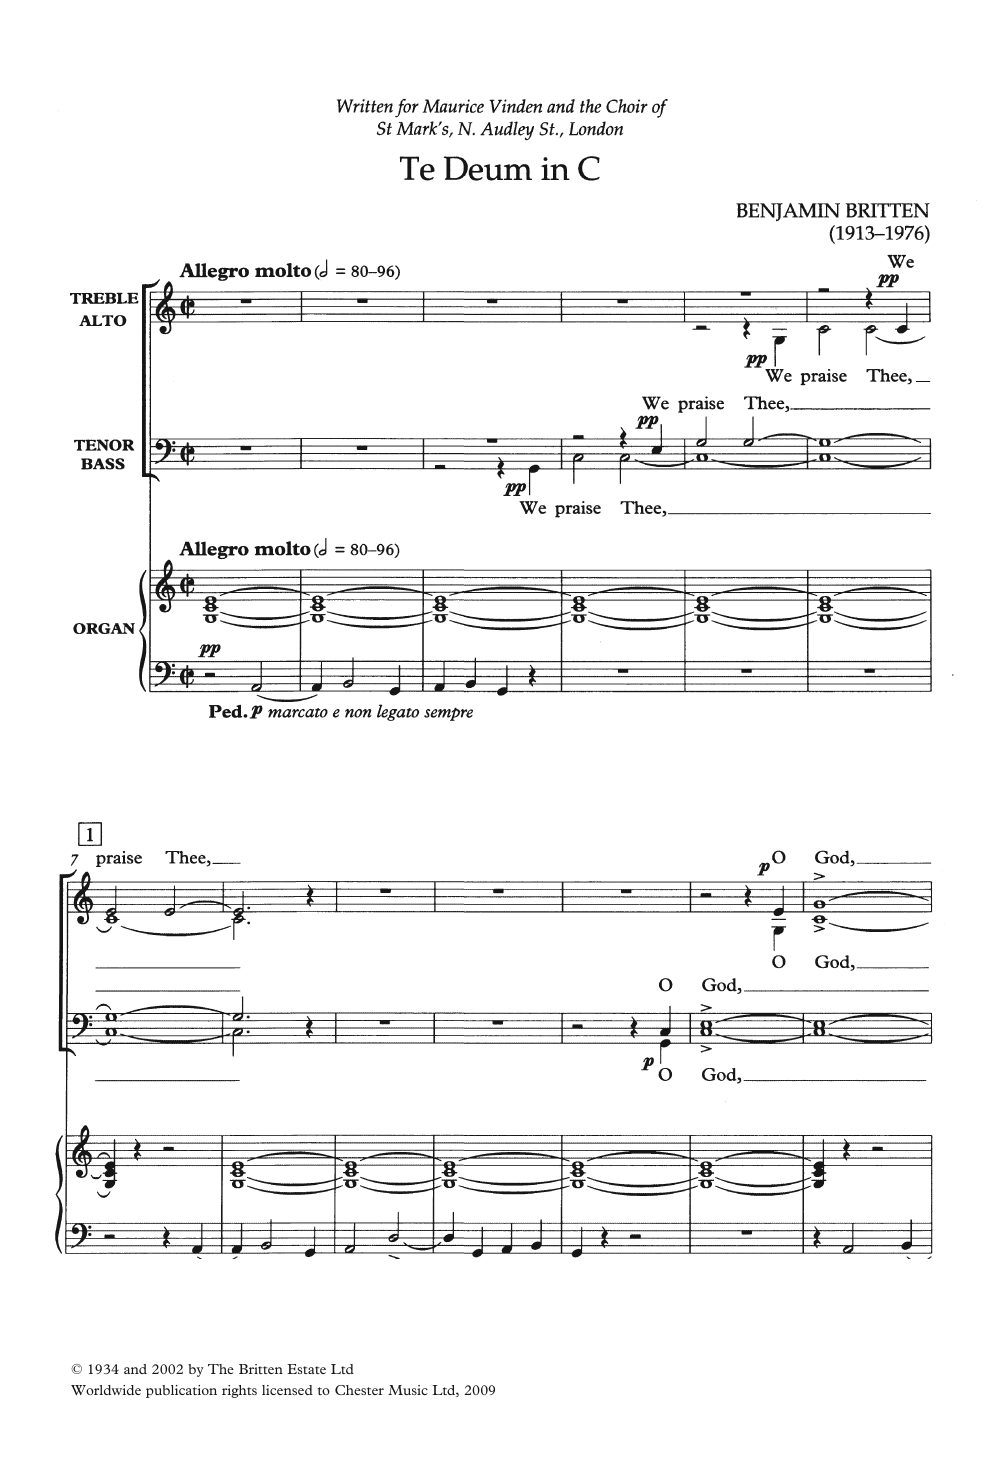 Download Benjamin Britten Te Deum In C Sheet Music and learn how to play Choir PDF digital score in minutes